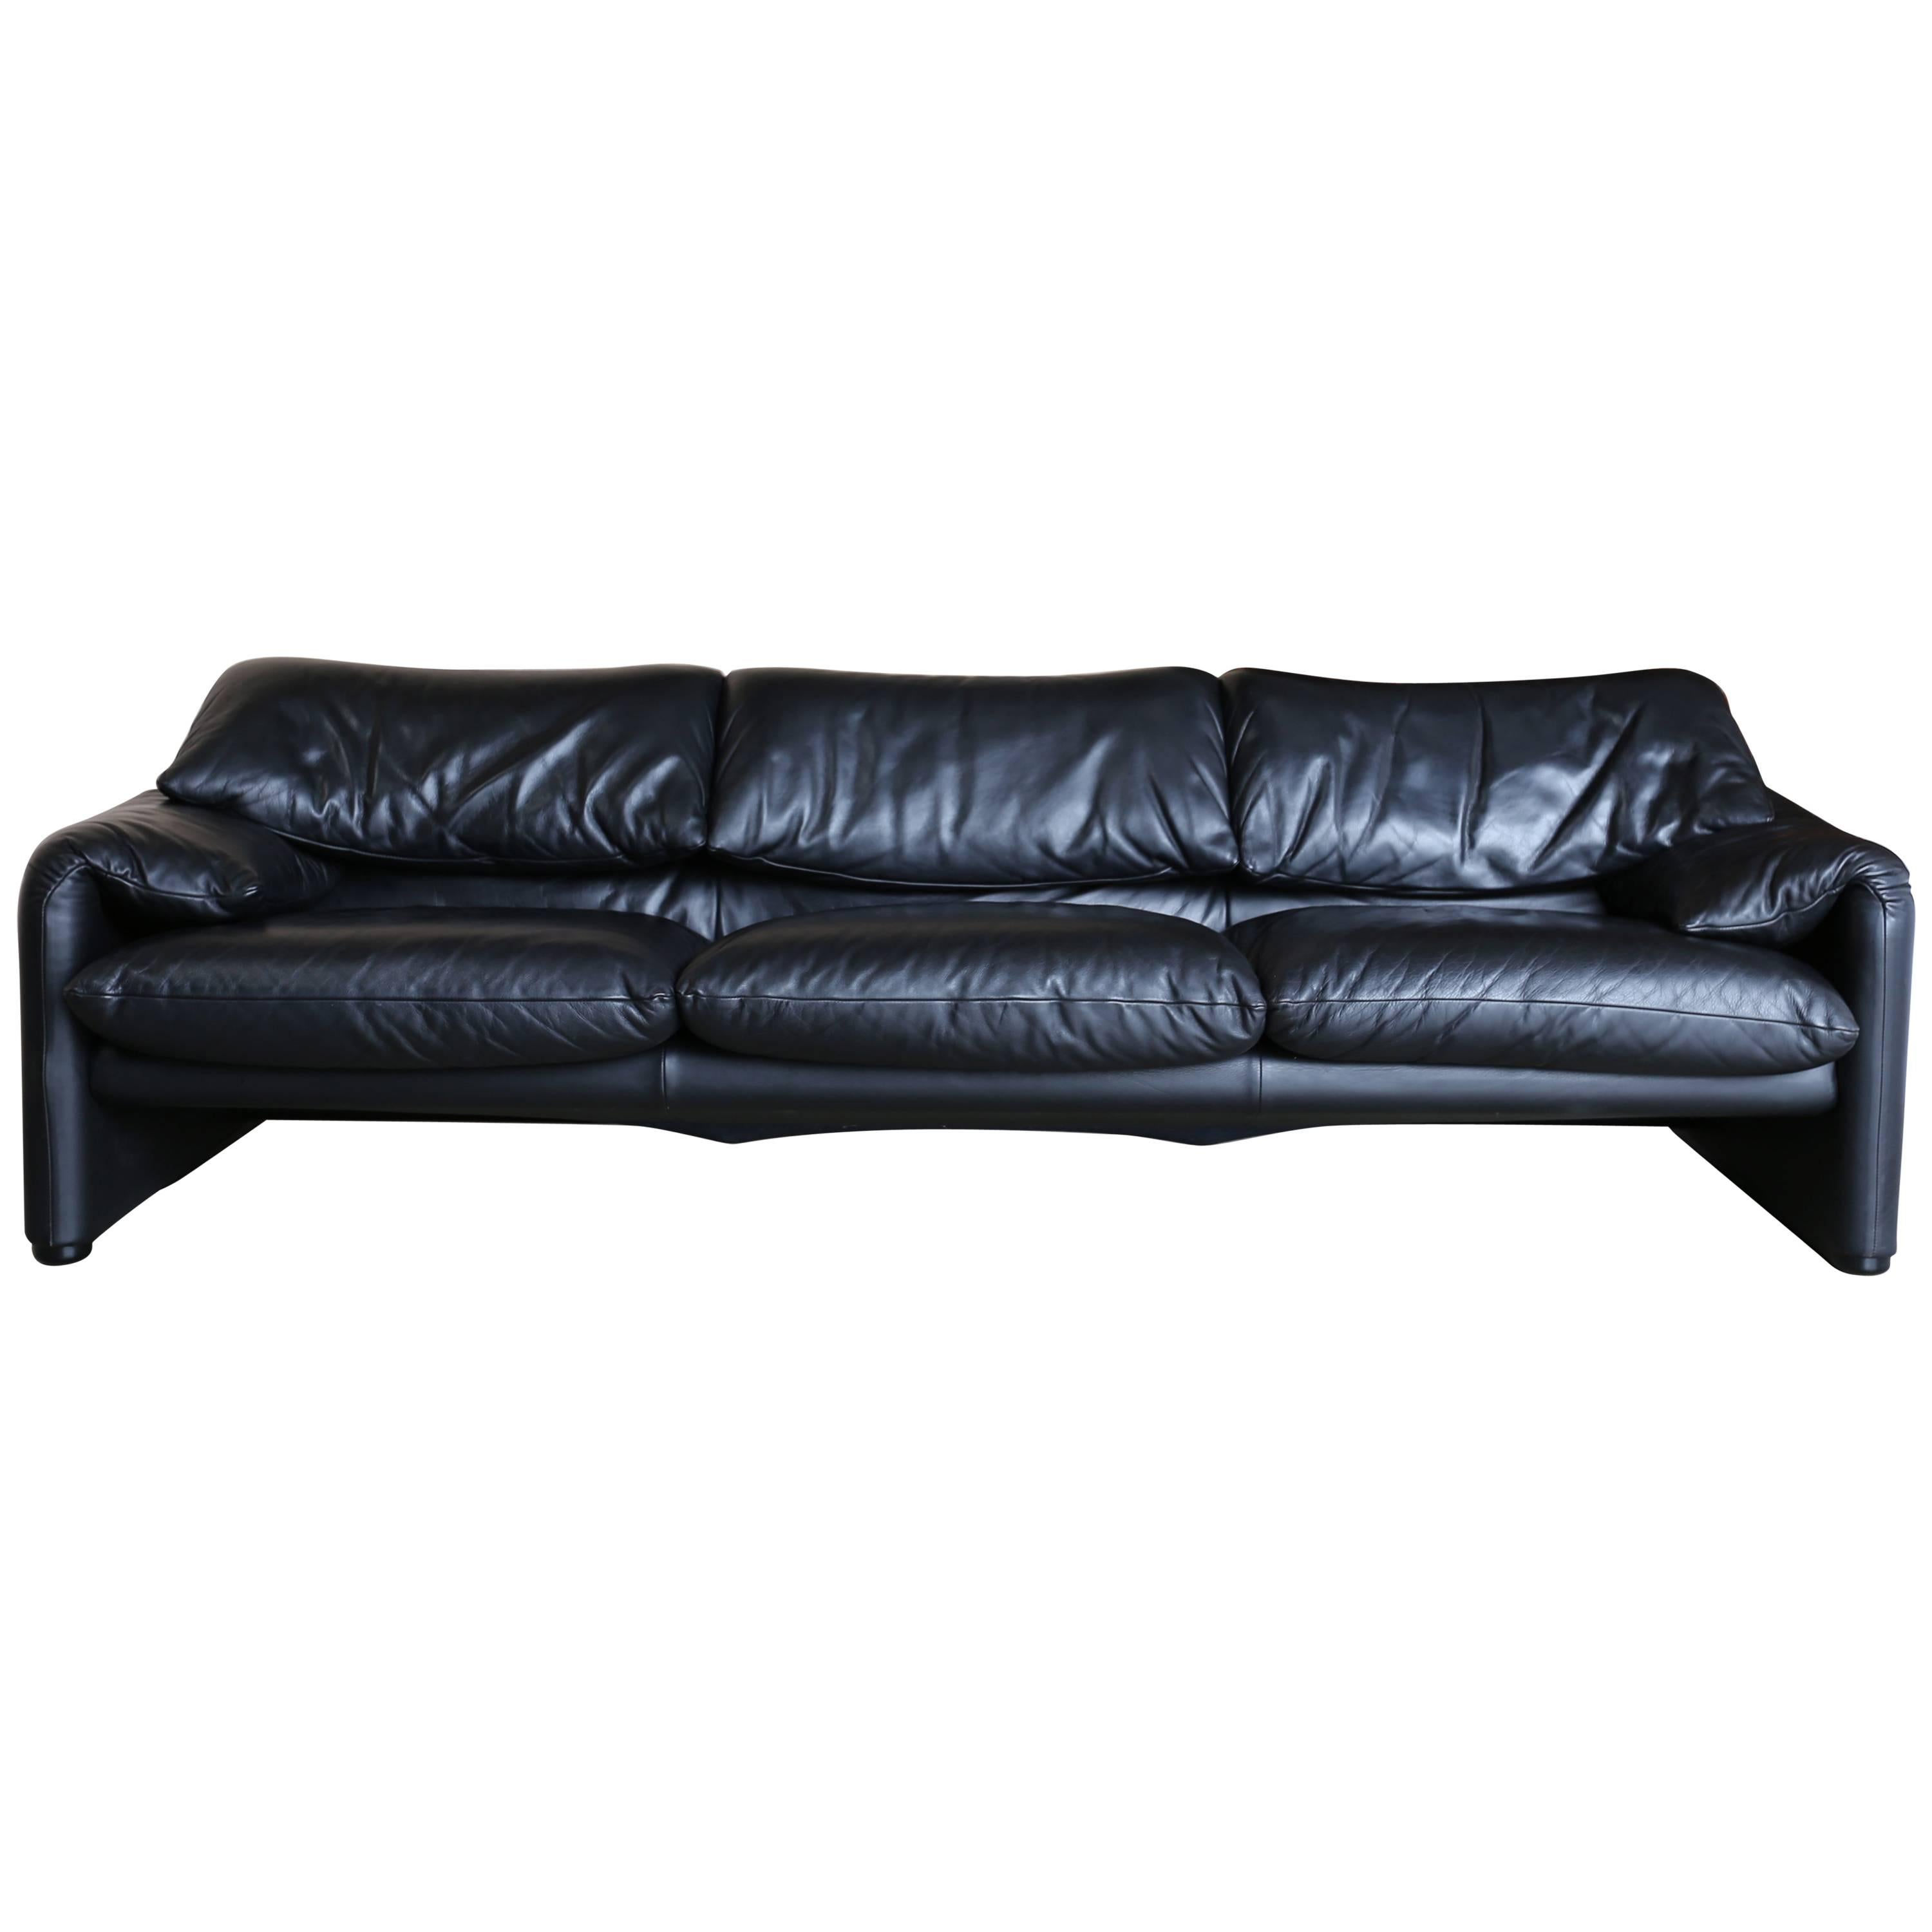 Black Leather "Maralunga" Sofa by Vico Magistretti for Cassina